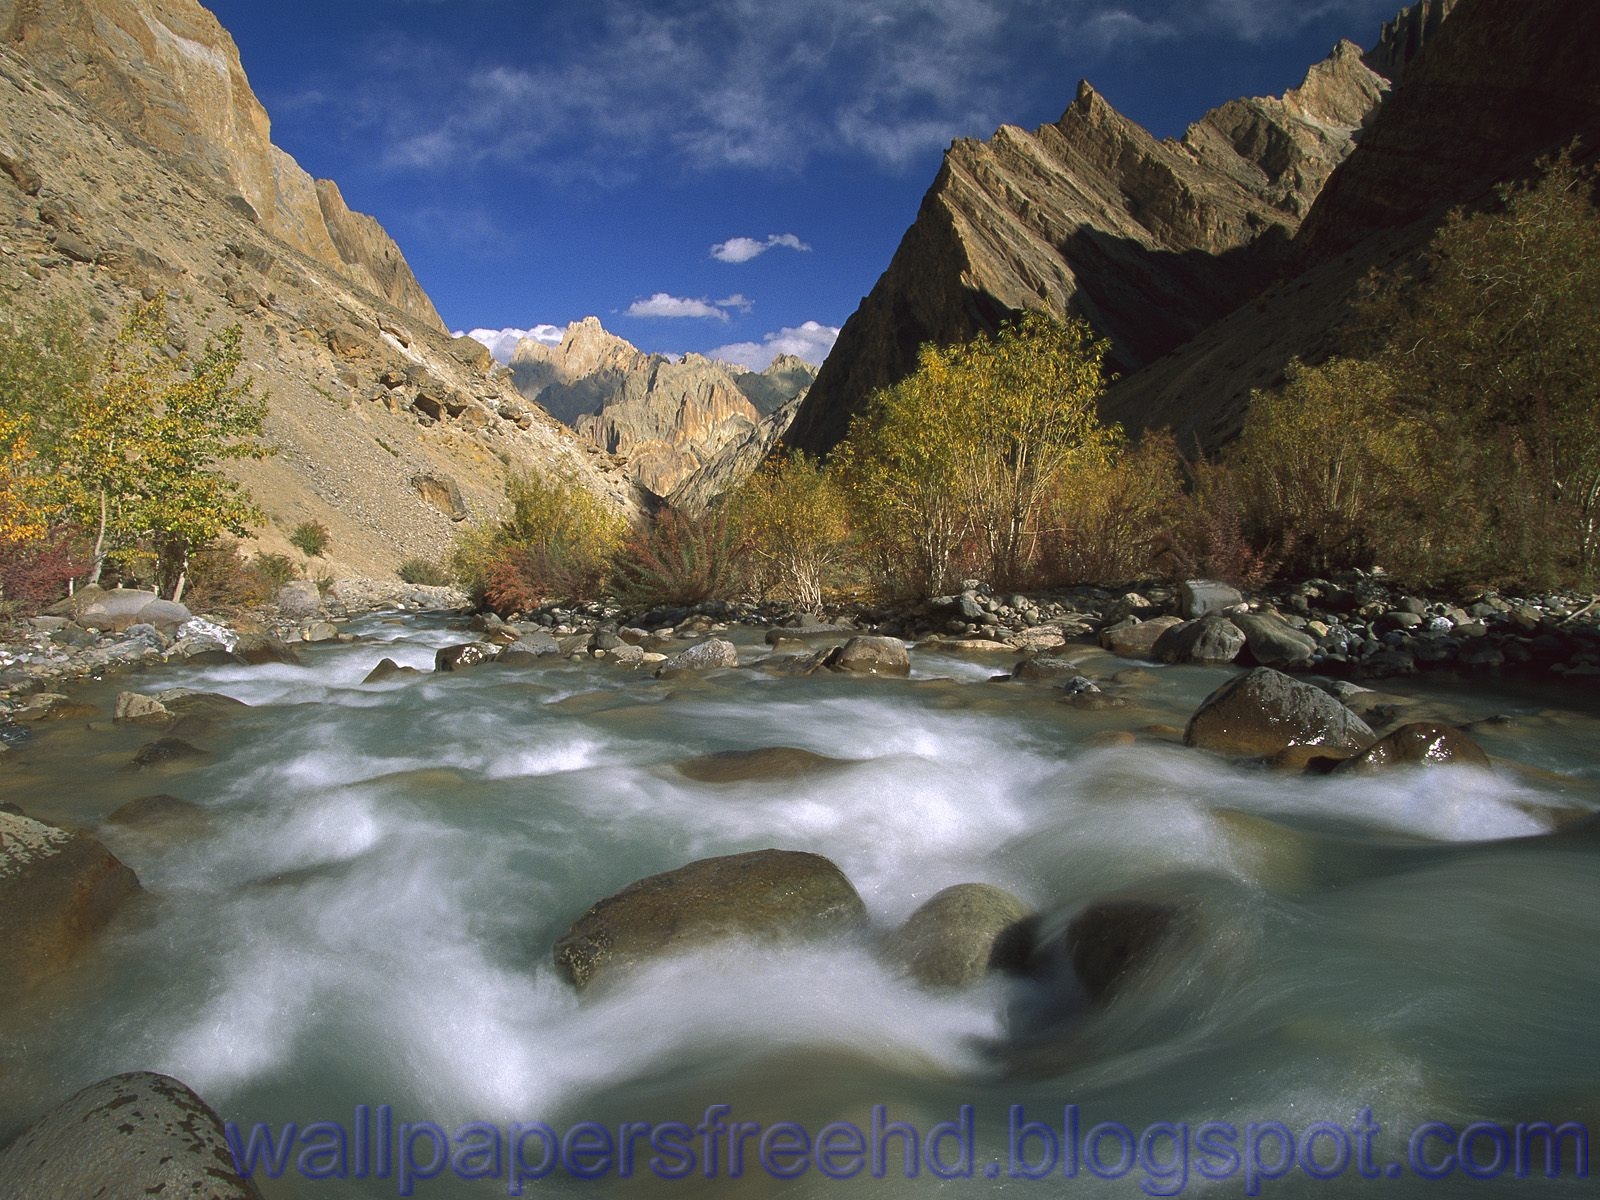 http://2.bp.blogspot.com/-eiFTW16zliY/Tiu-BCE8jHI/AAAAAAAADCY/3sWLB9nHDCE/s1600/Hanupata_River_Gorge_Ladakh_India.jpg